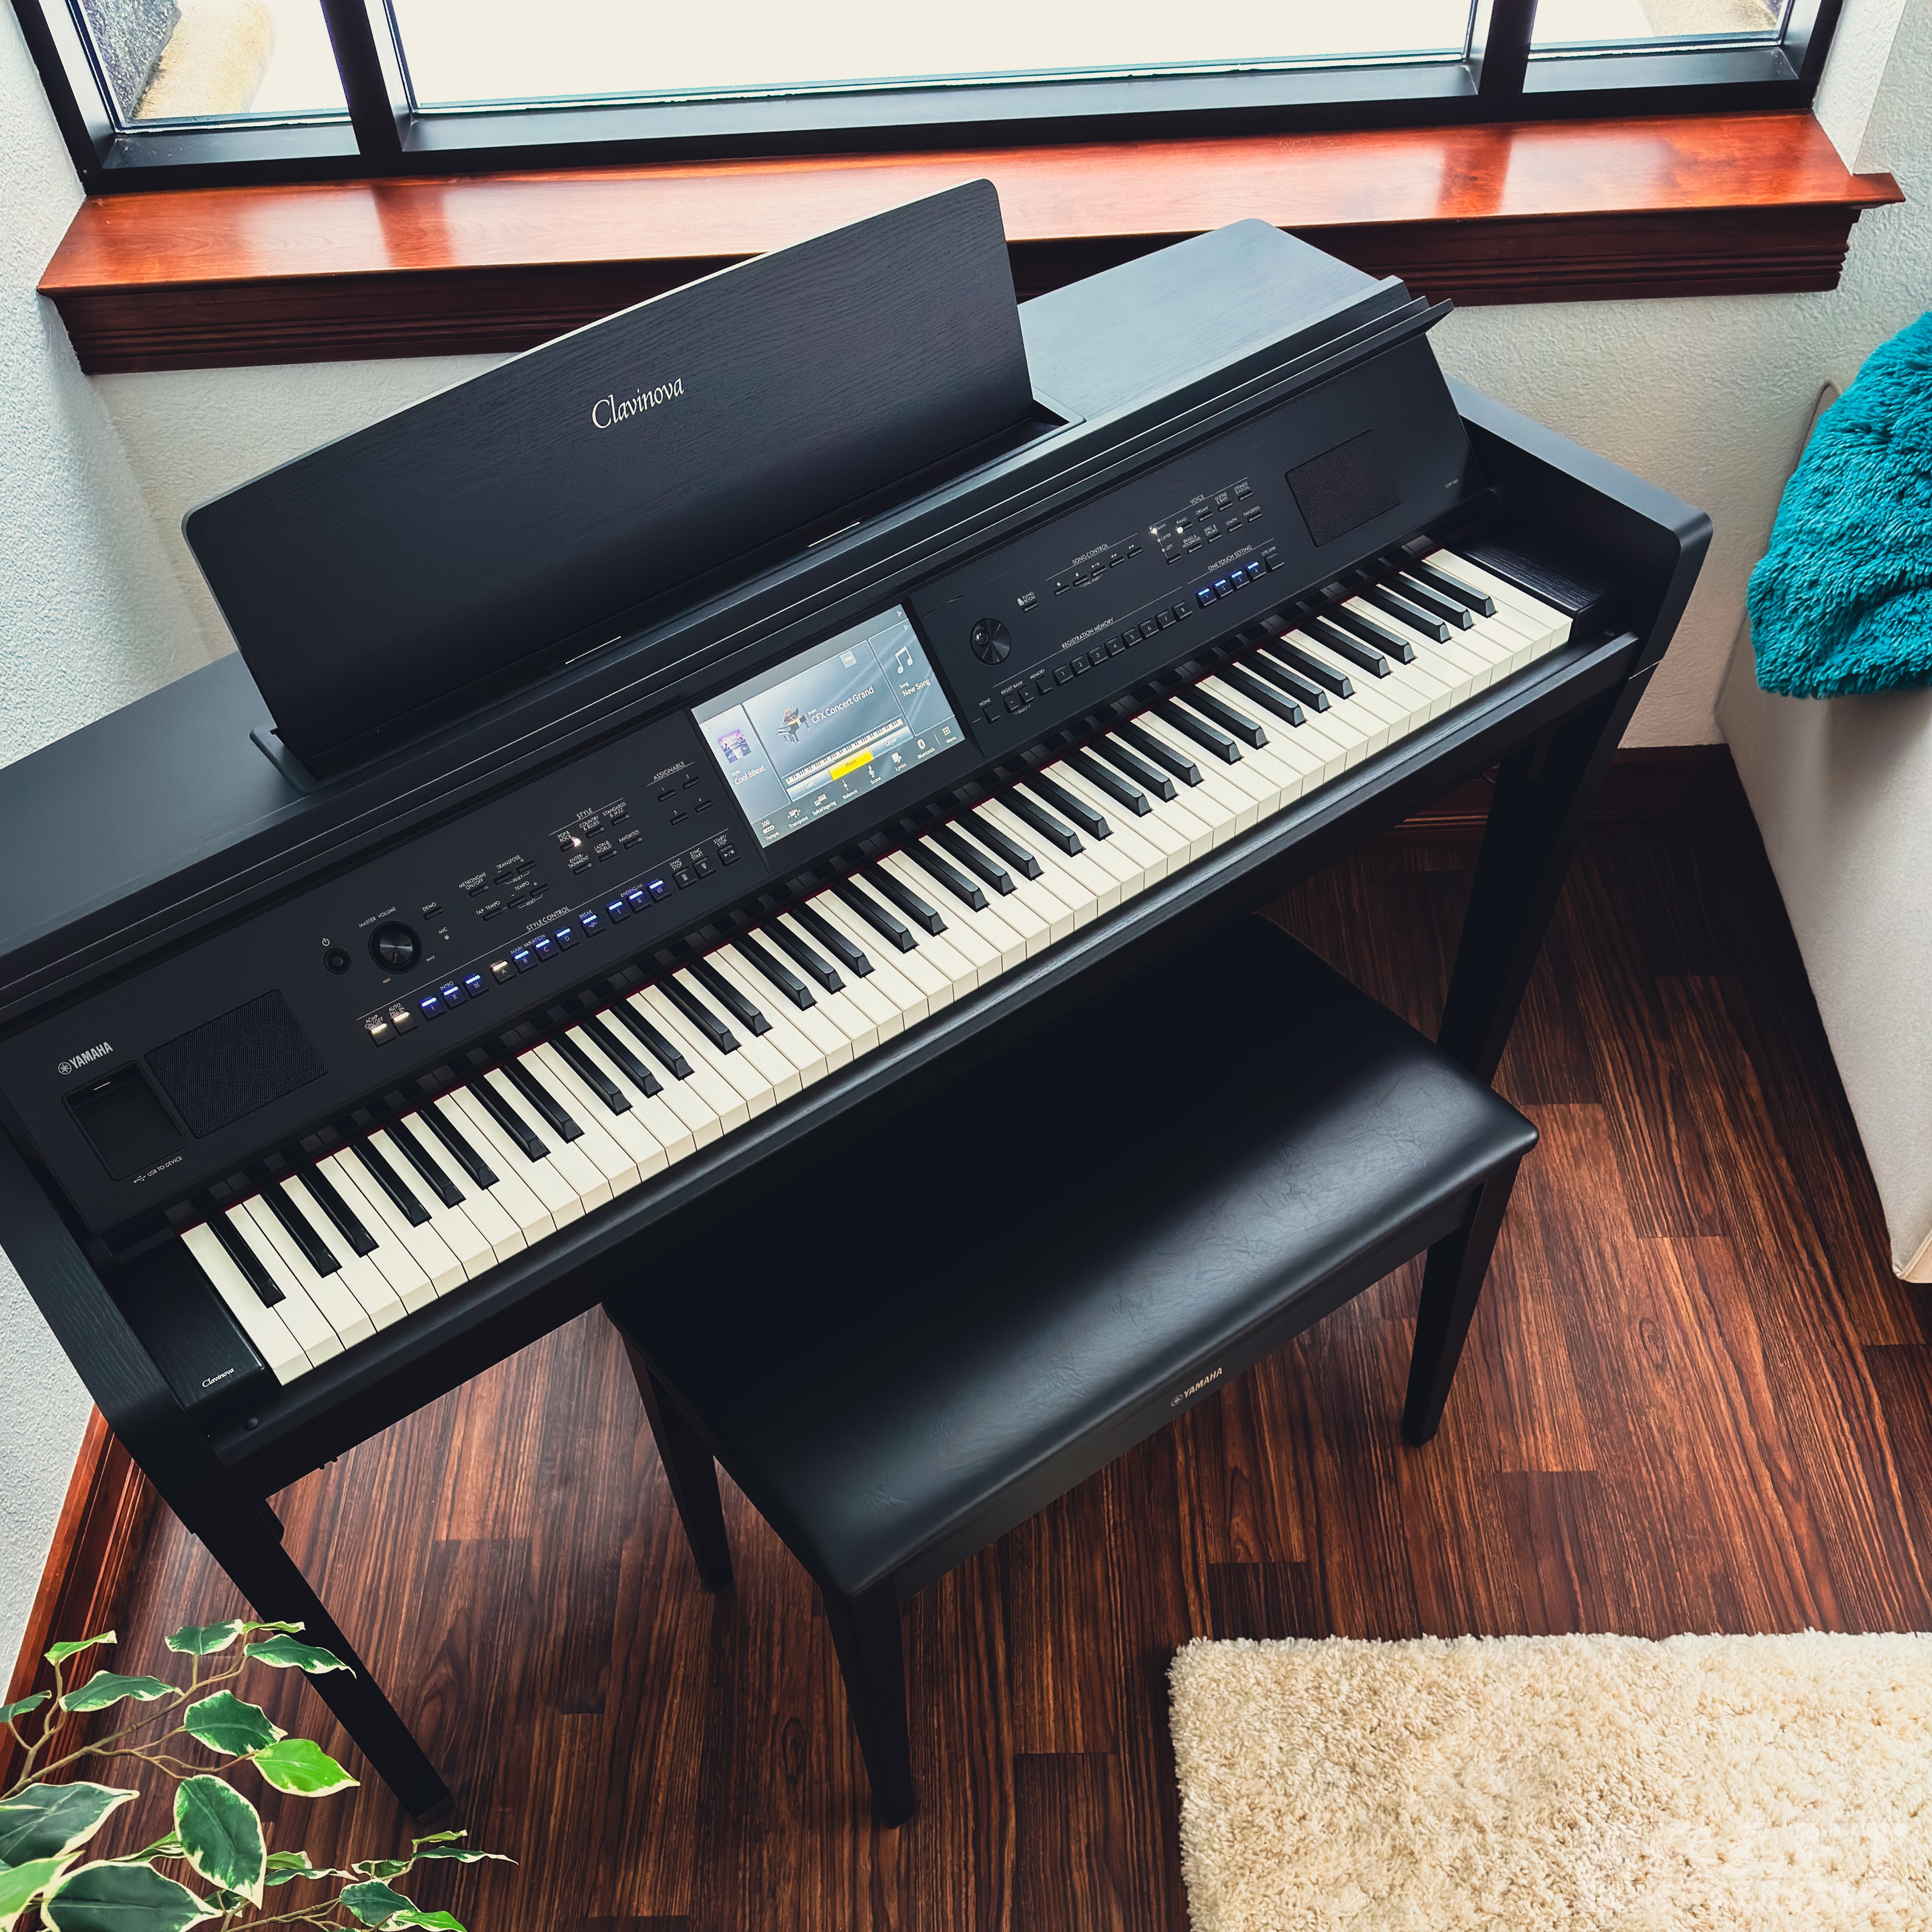 Yamaha Clavinova CVP-909 Digital Piano - Matte Black - in a stylish living room from above